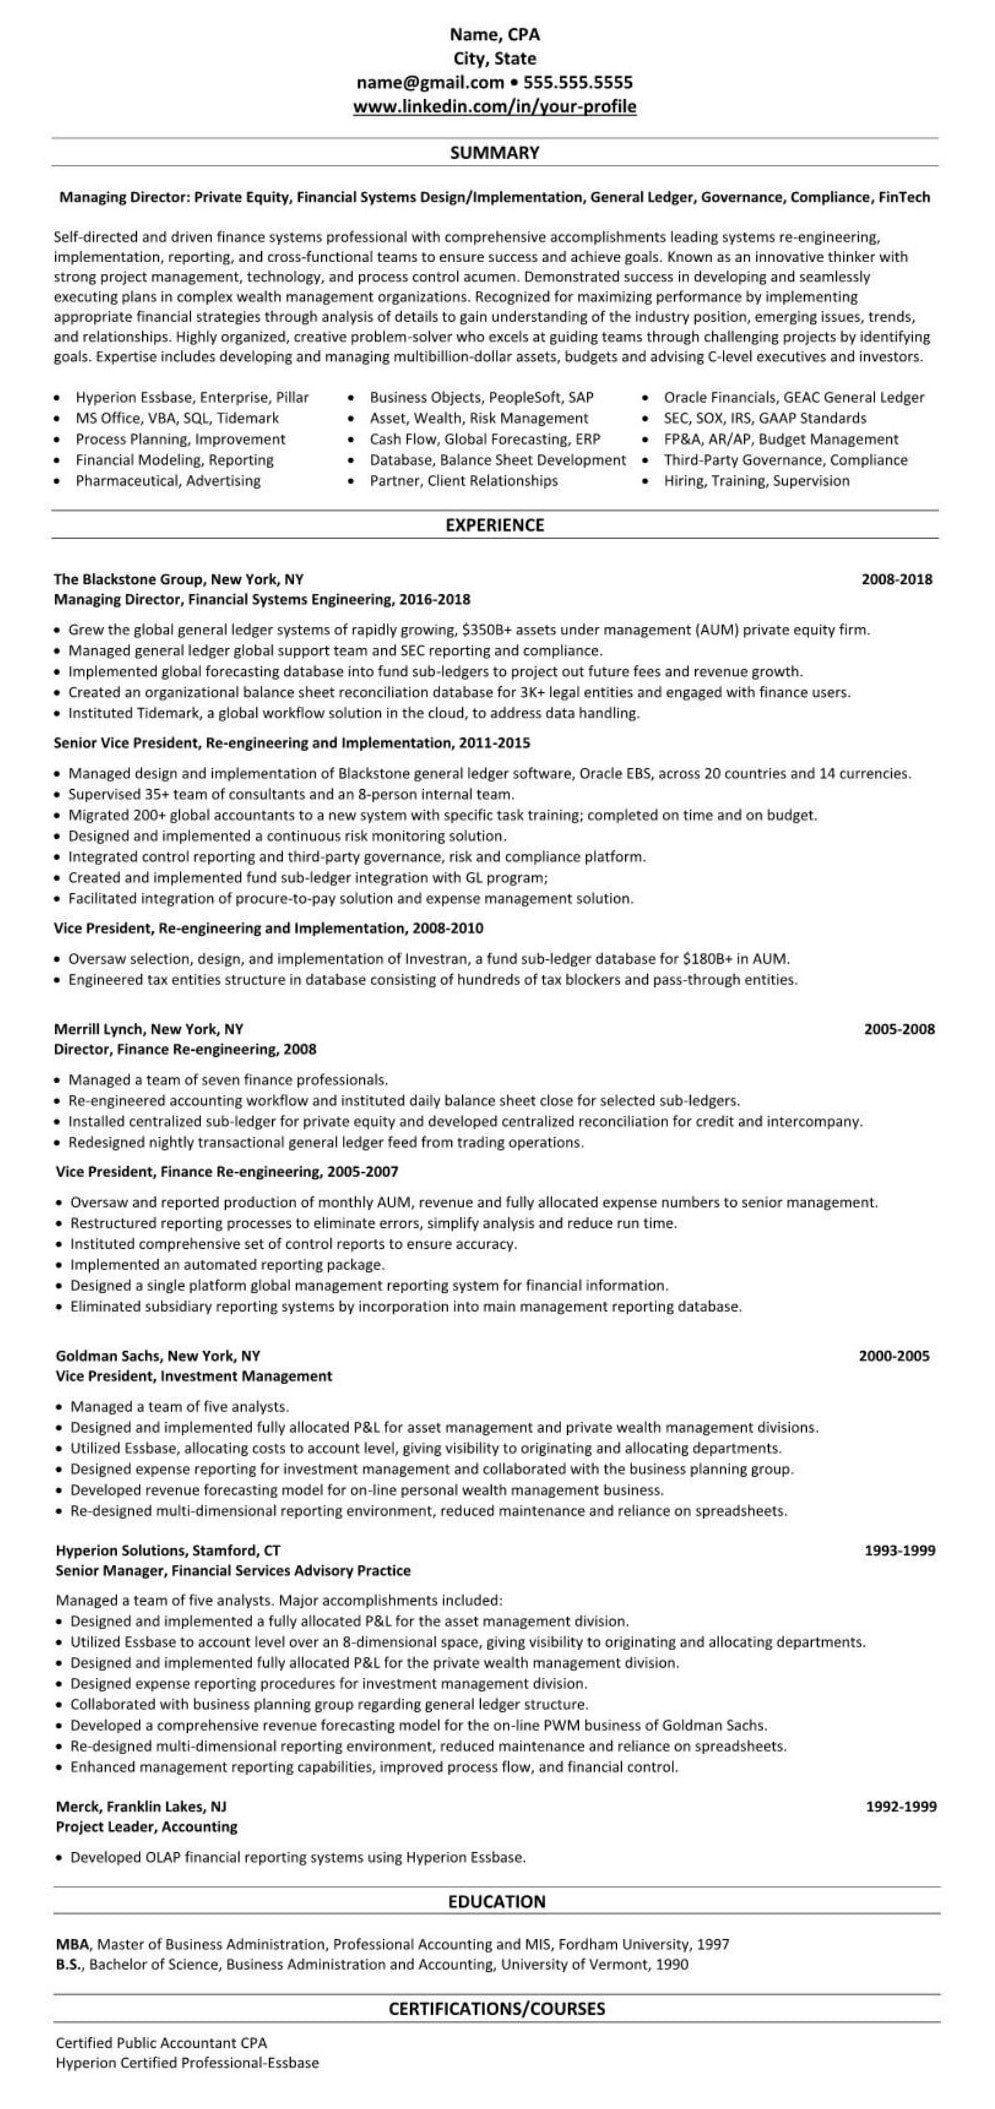 Sample Resume for Venture Capital Analyst Sample Linkedin Profile & Resume: Private Equity Venture Capital